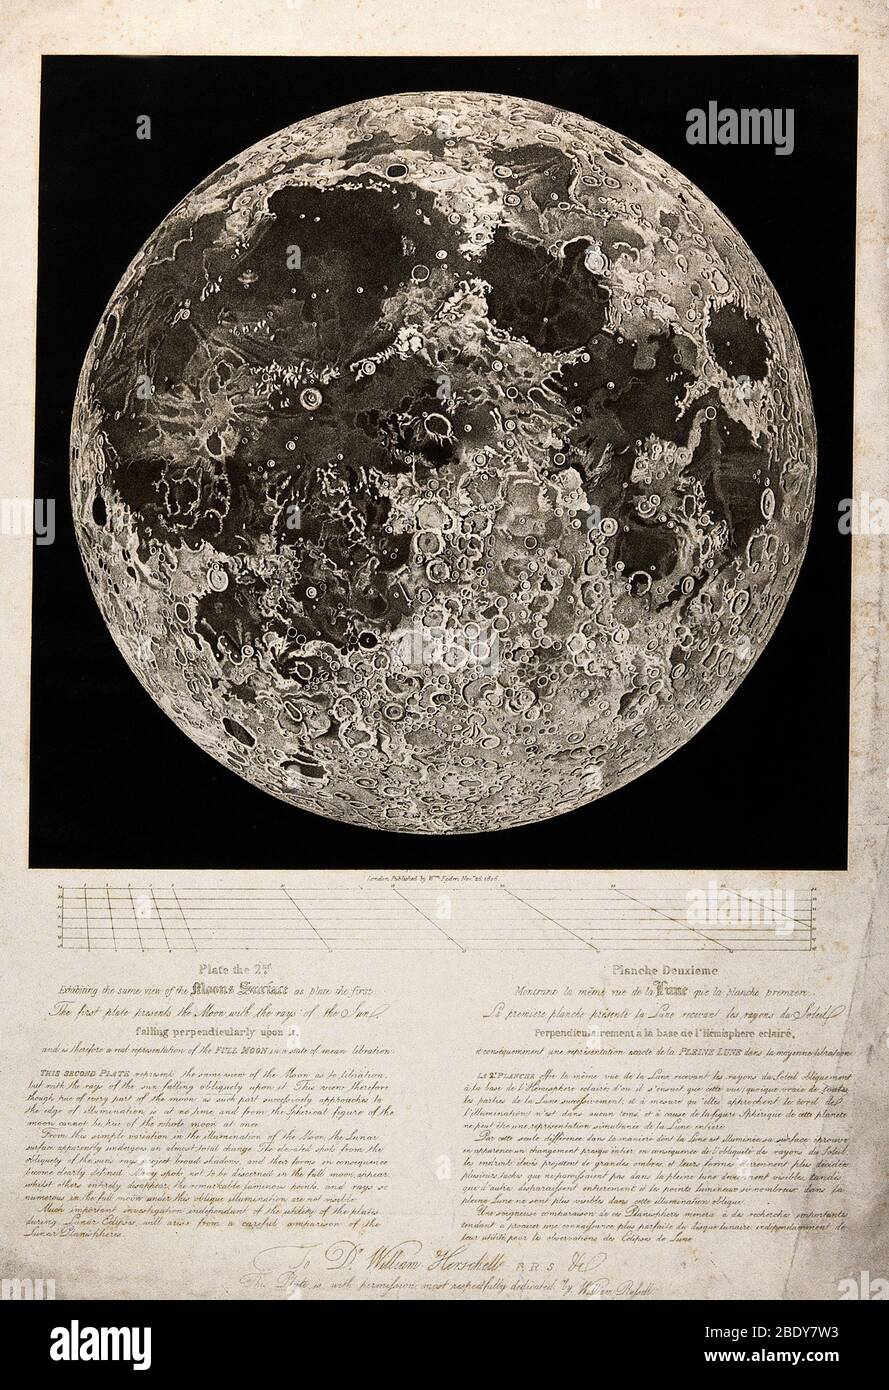 Luna superficie por John Russell, para Herschel, 1806 Foto de stock